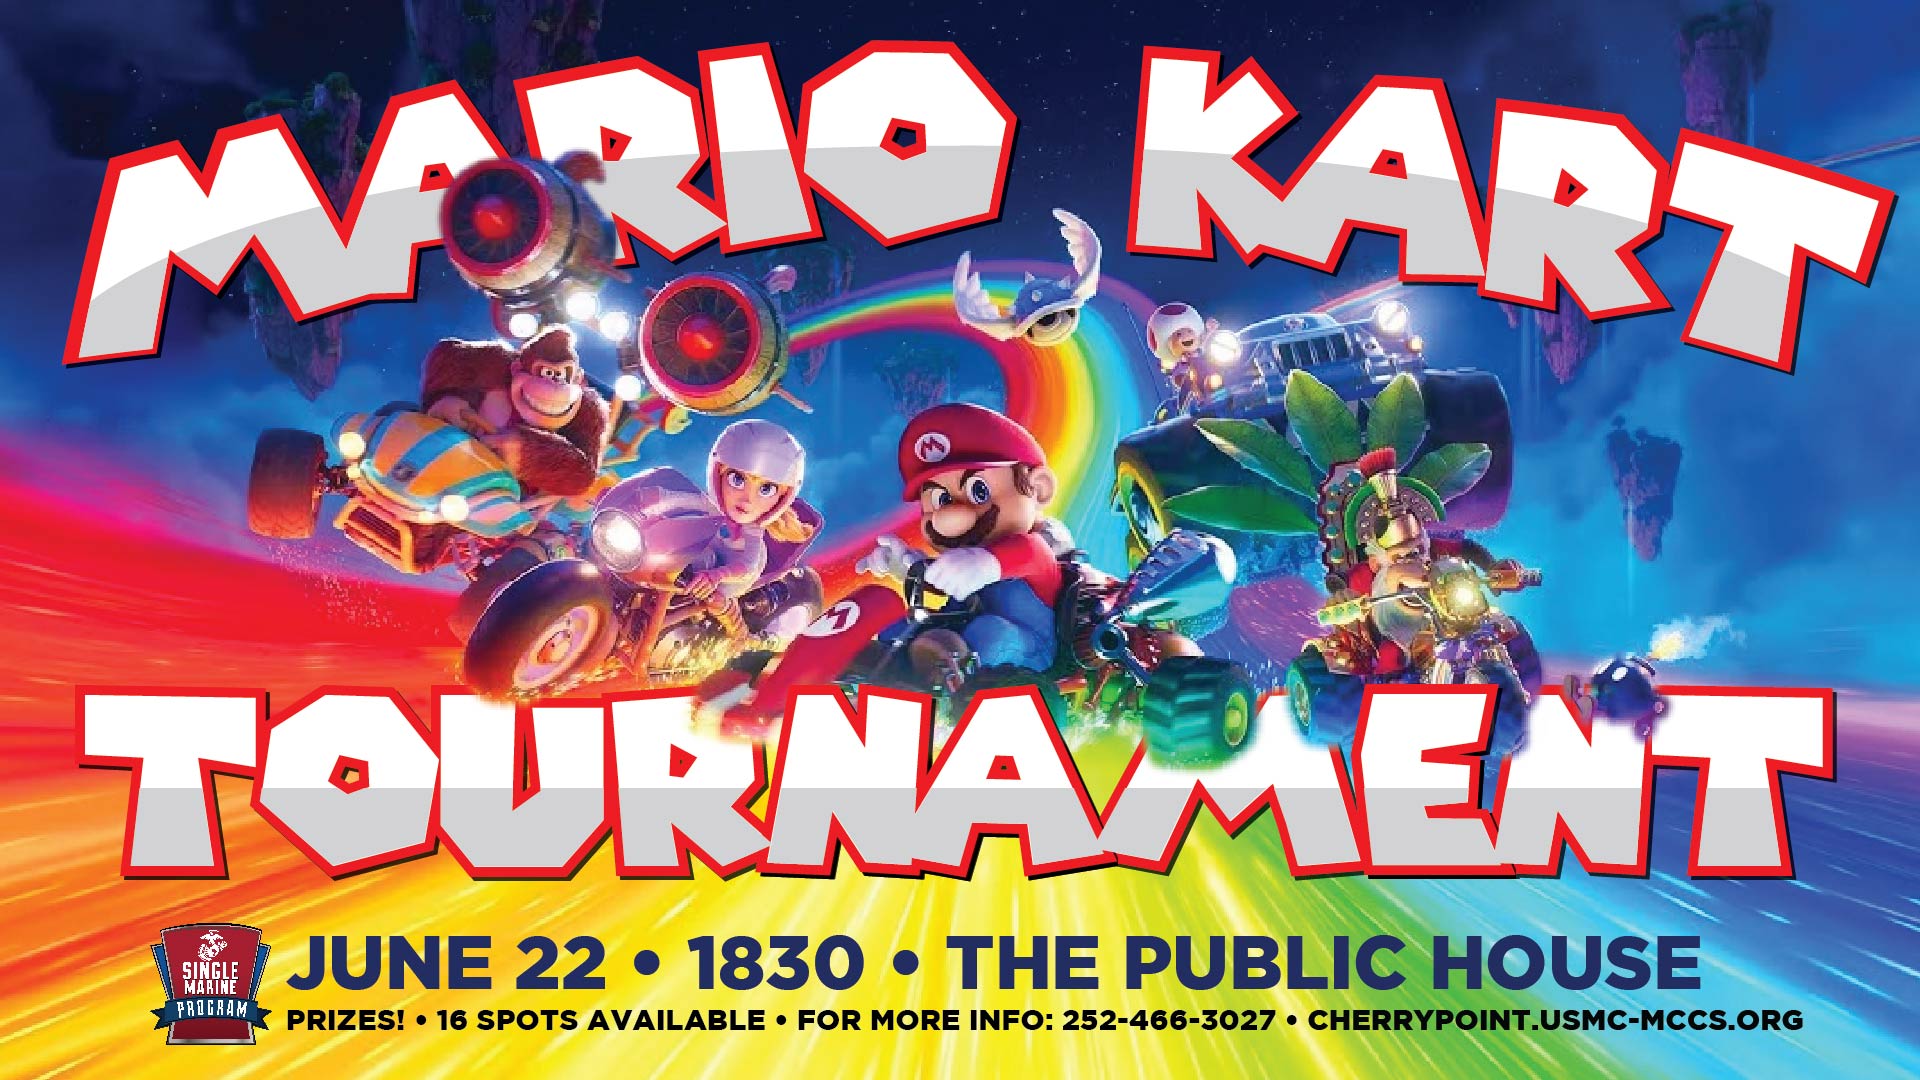 Attend cSAB-sponsored Mario Kart tournament this Friday